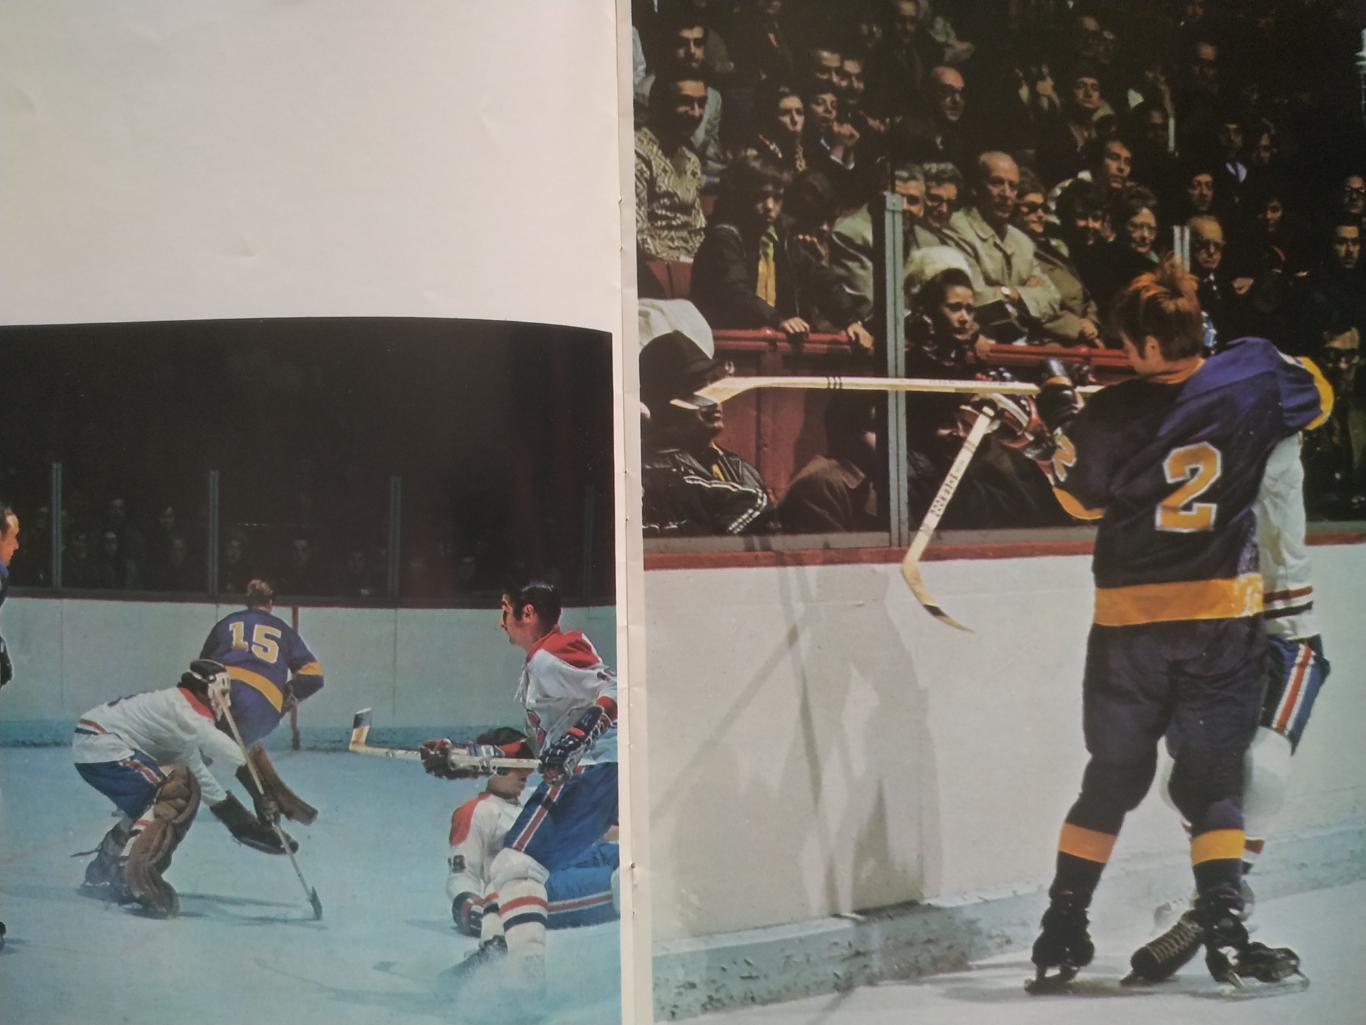 ХОККЕЙ ПРОГРАММА АЛЬБОМ ЛОС АНДЖЕЛЕС НХЛ NHL 1971 DEC.01 LOS ANGELES PROGRAM 3